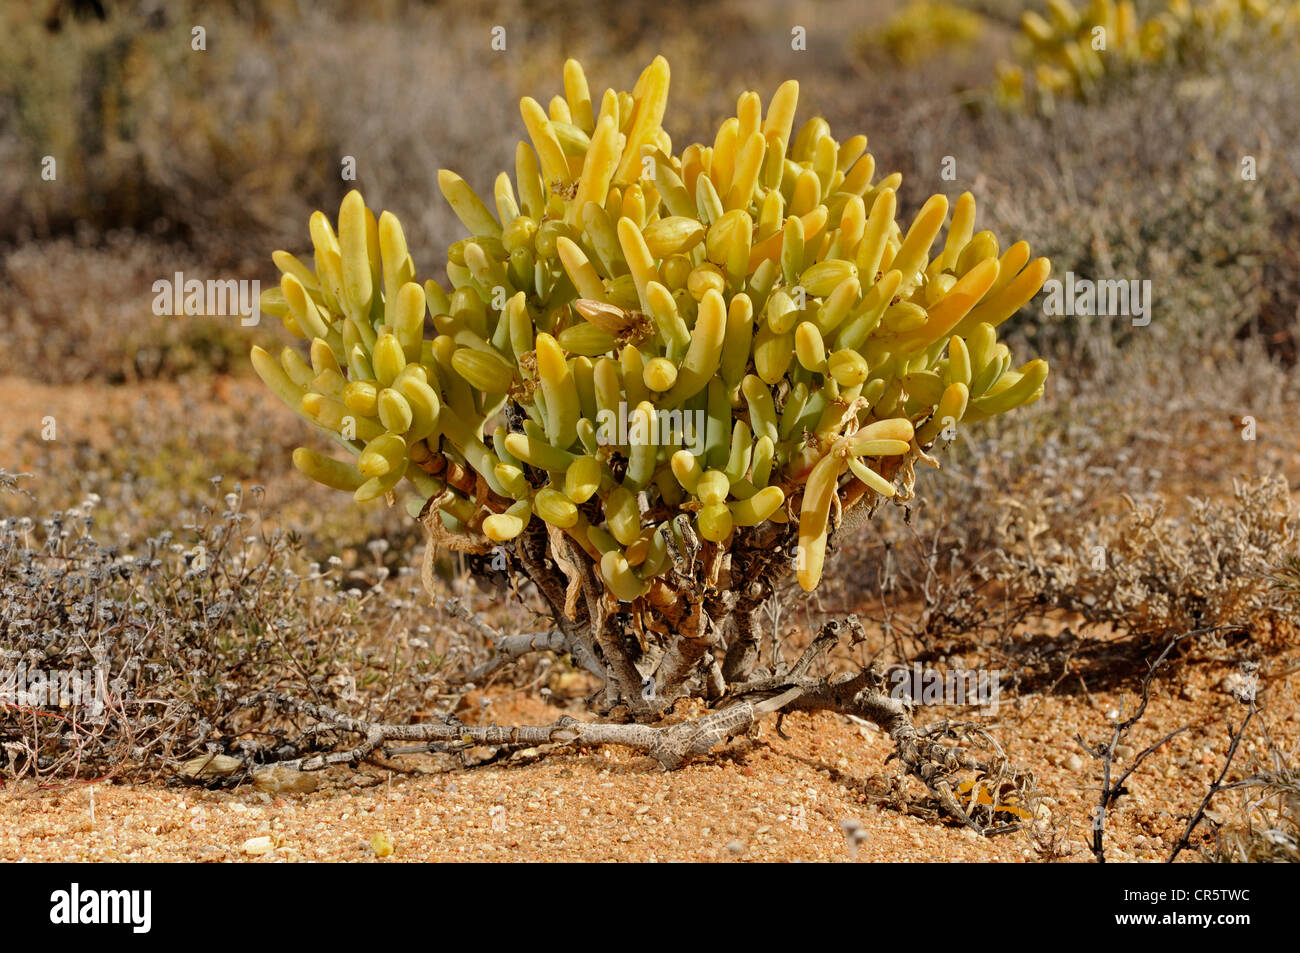 Augea capensis, Kinder-pieletjies con hojas suculentas, Zygophyllaceae, Reserva Natural, Namaqualand, Sudáfrica, África Foto de stock